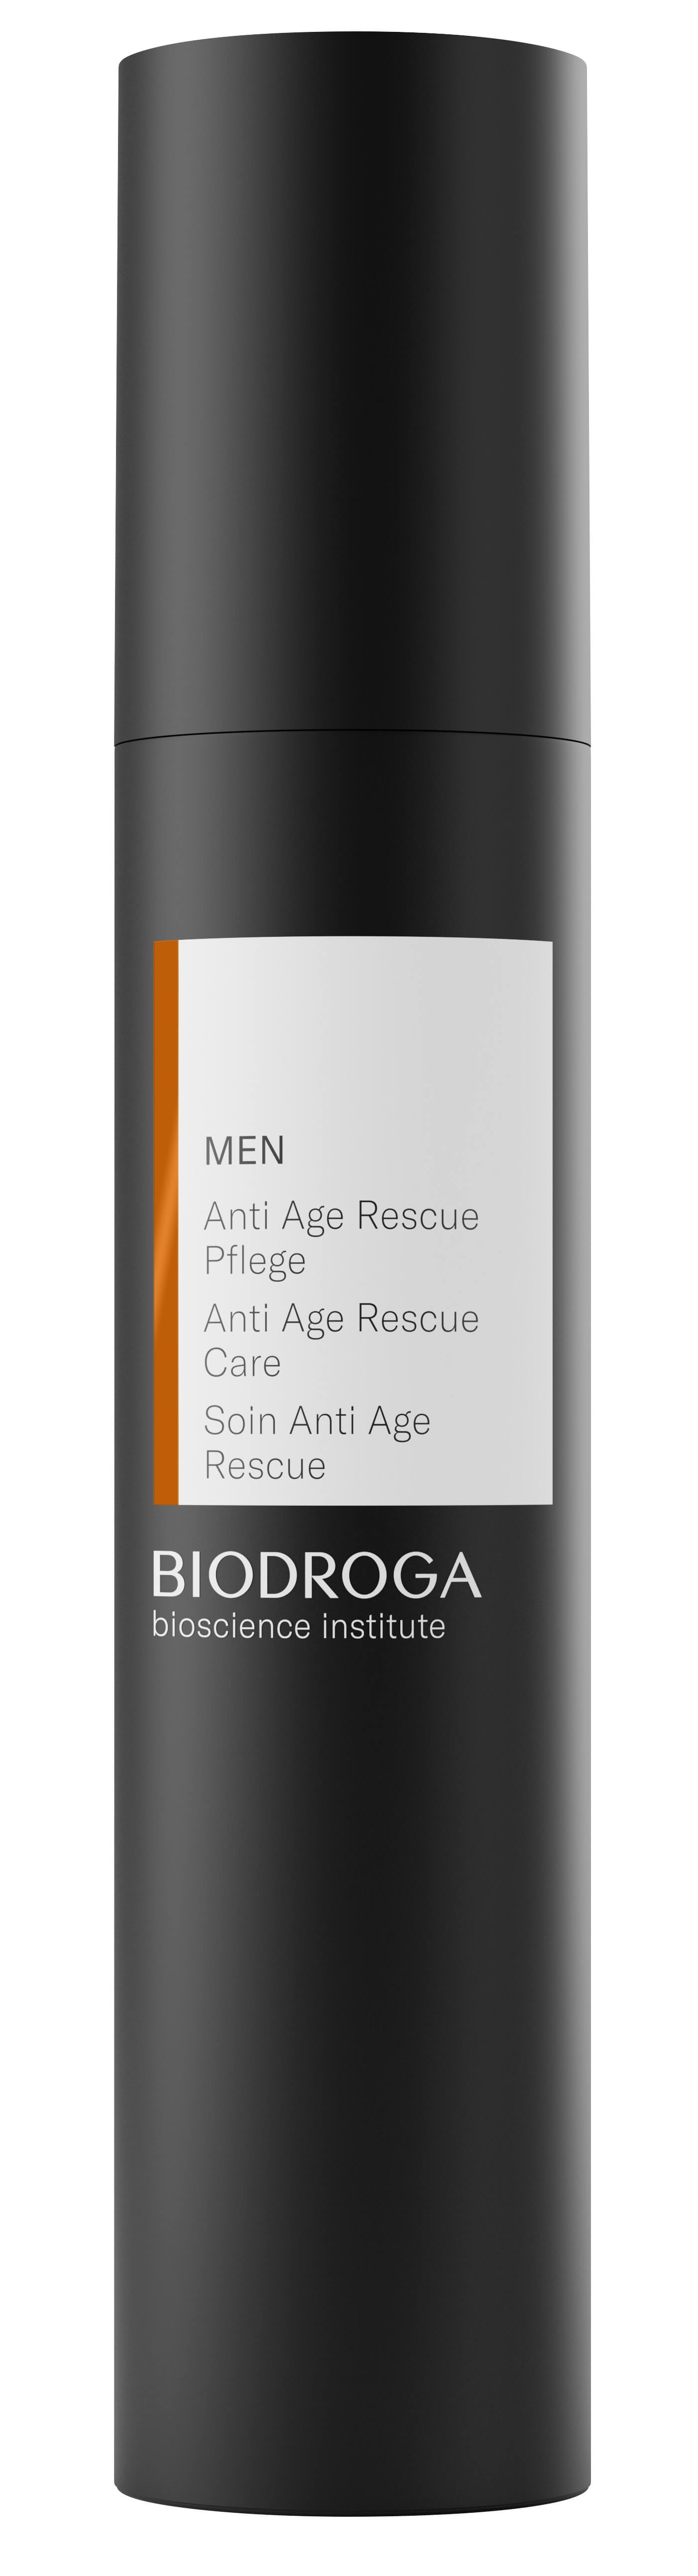 Biodroga Bioscience Institute Men Anti Age Rescue Pflege 50 ml